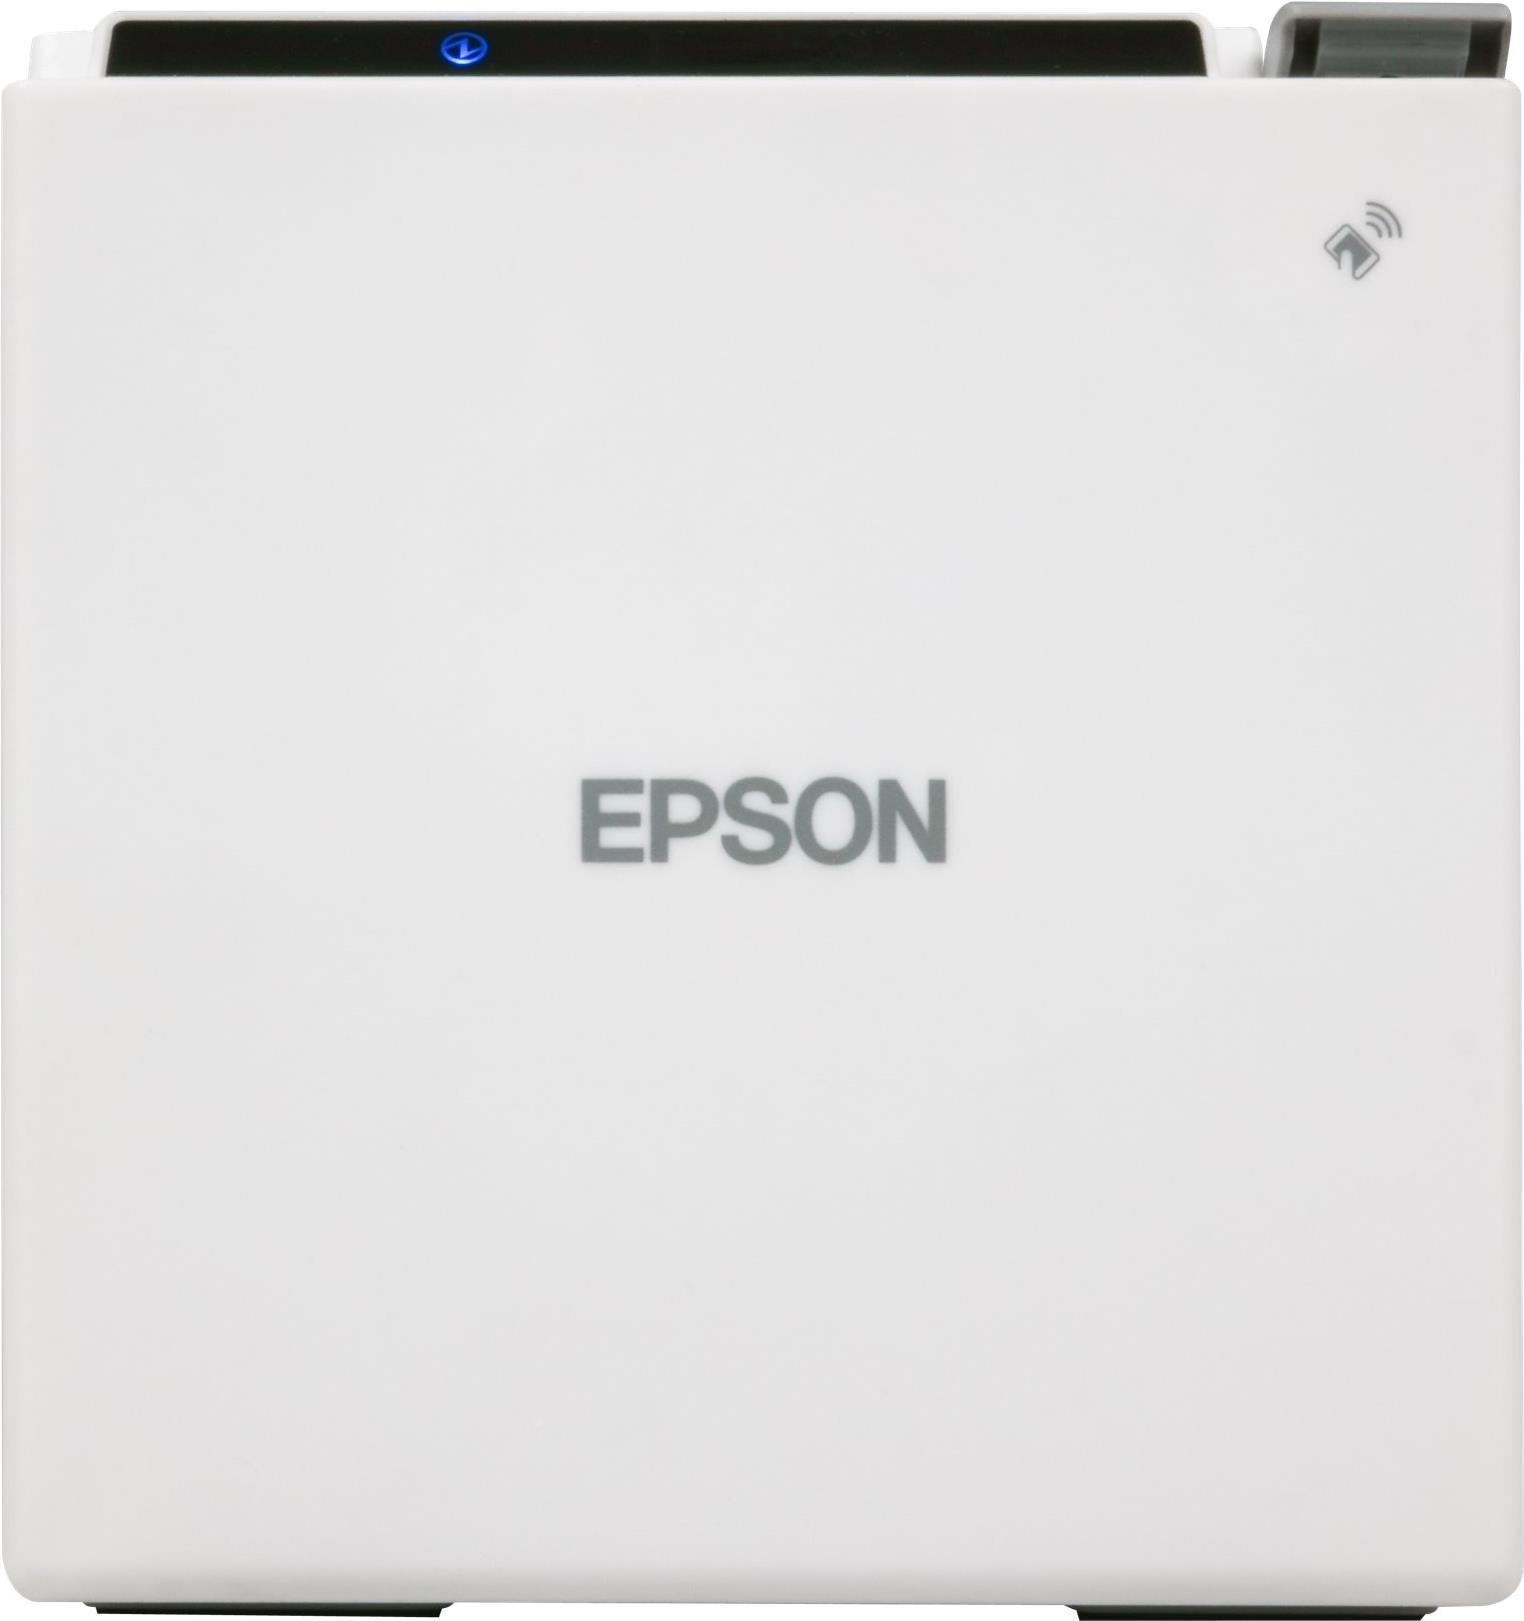 EPSON POS Epson TM-m30II (121A0): USB + Ethernet + NES, White, PS, UK (C31CJ27121A0)